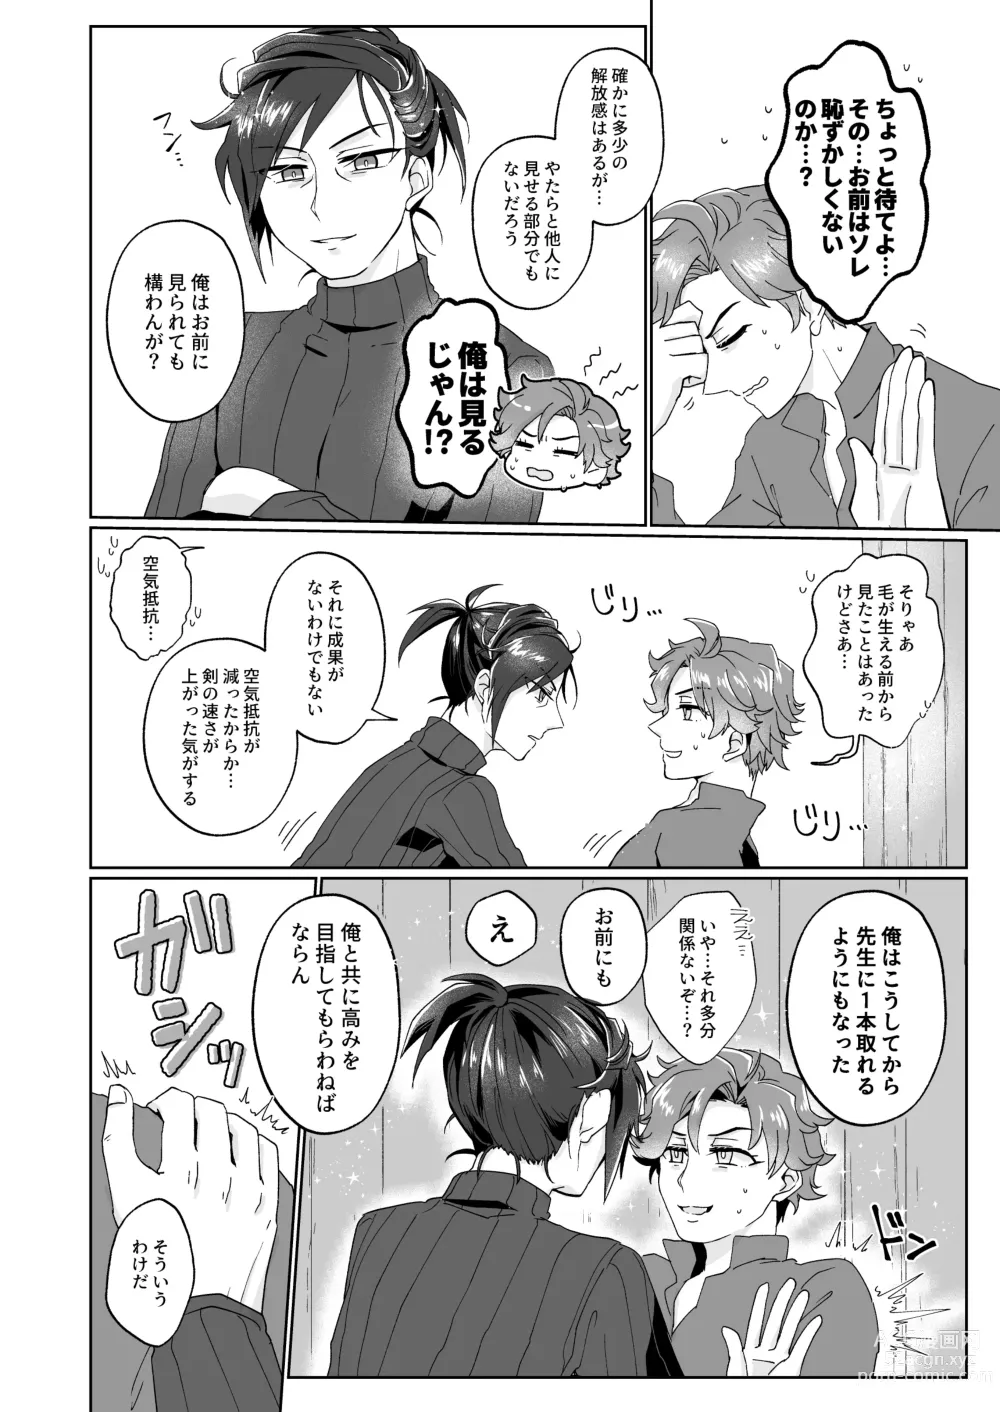 Page 8 of doujinshi Shaving Panic!